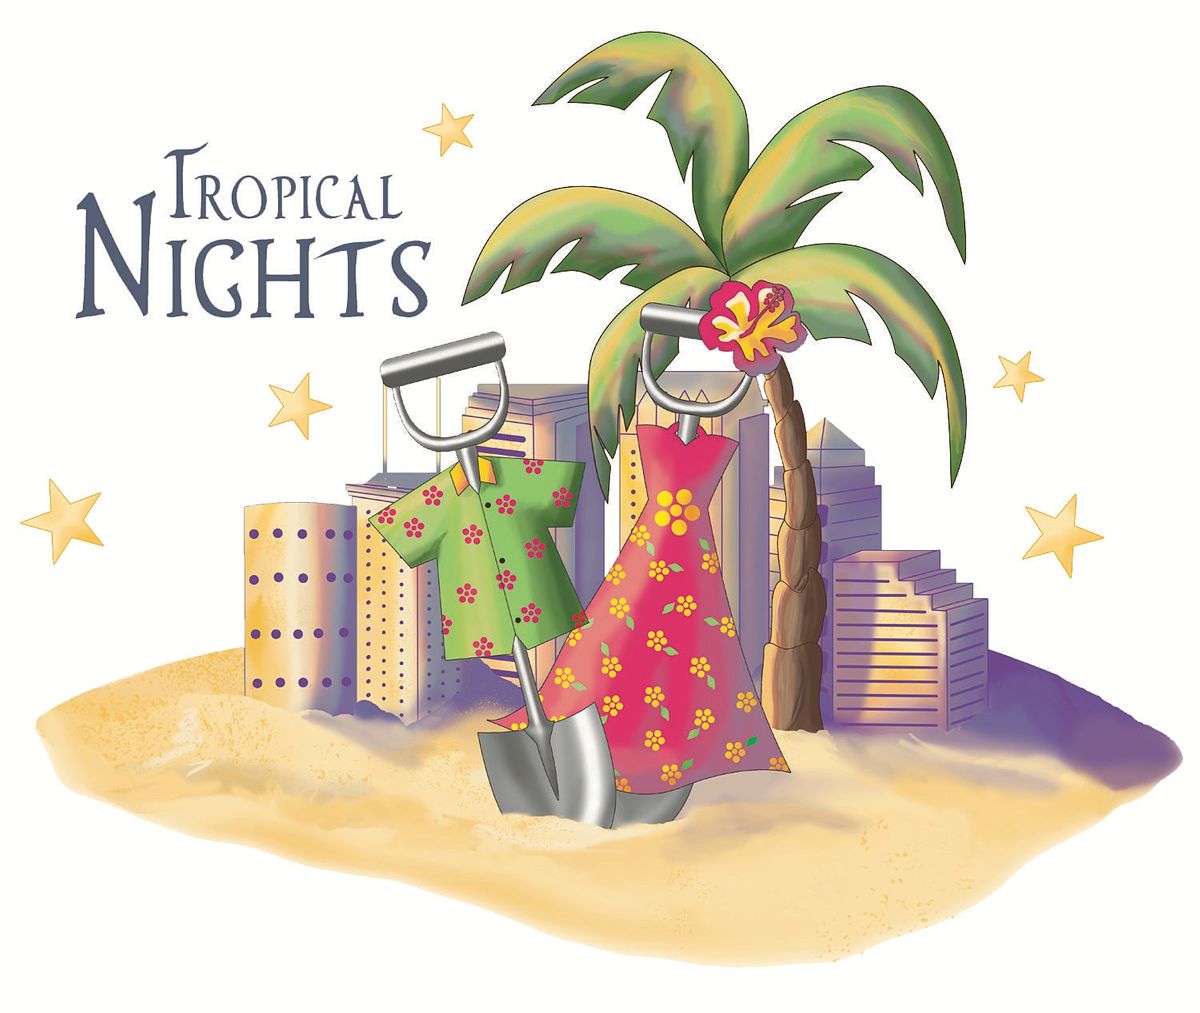 Tropical Nights Celebrating 31 Years